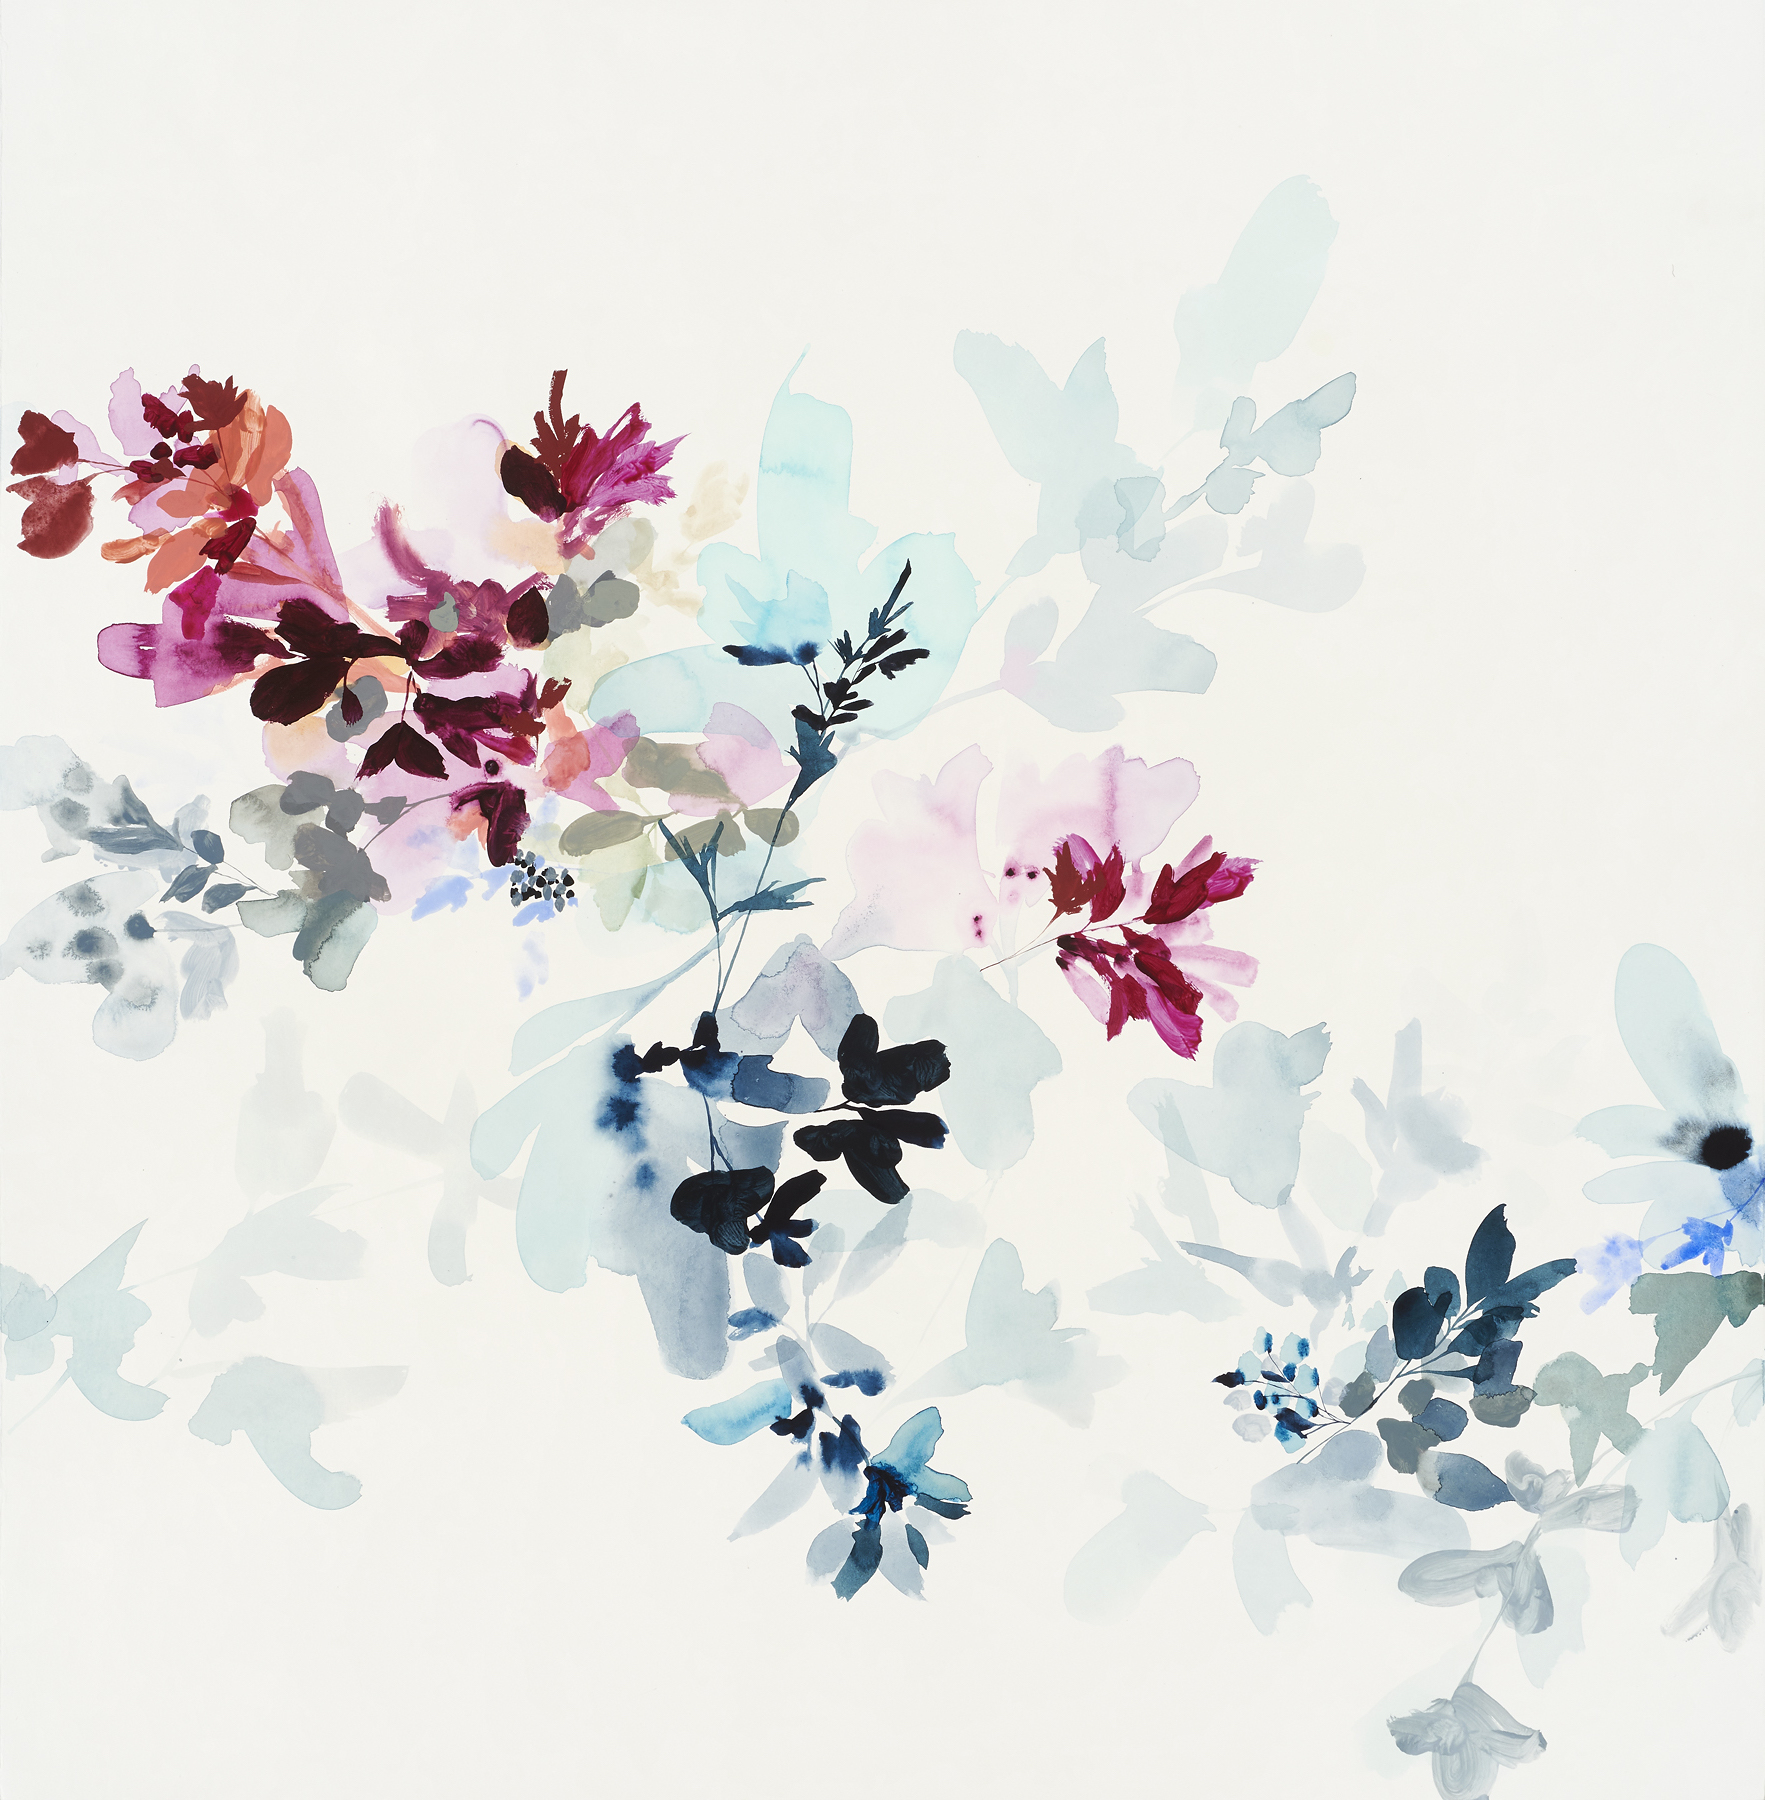 Wildflower Study -6B, 2019, mixed media on paper, 30 x 29"